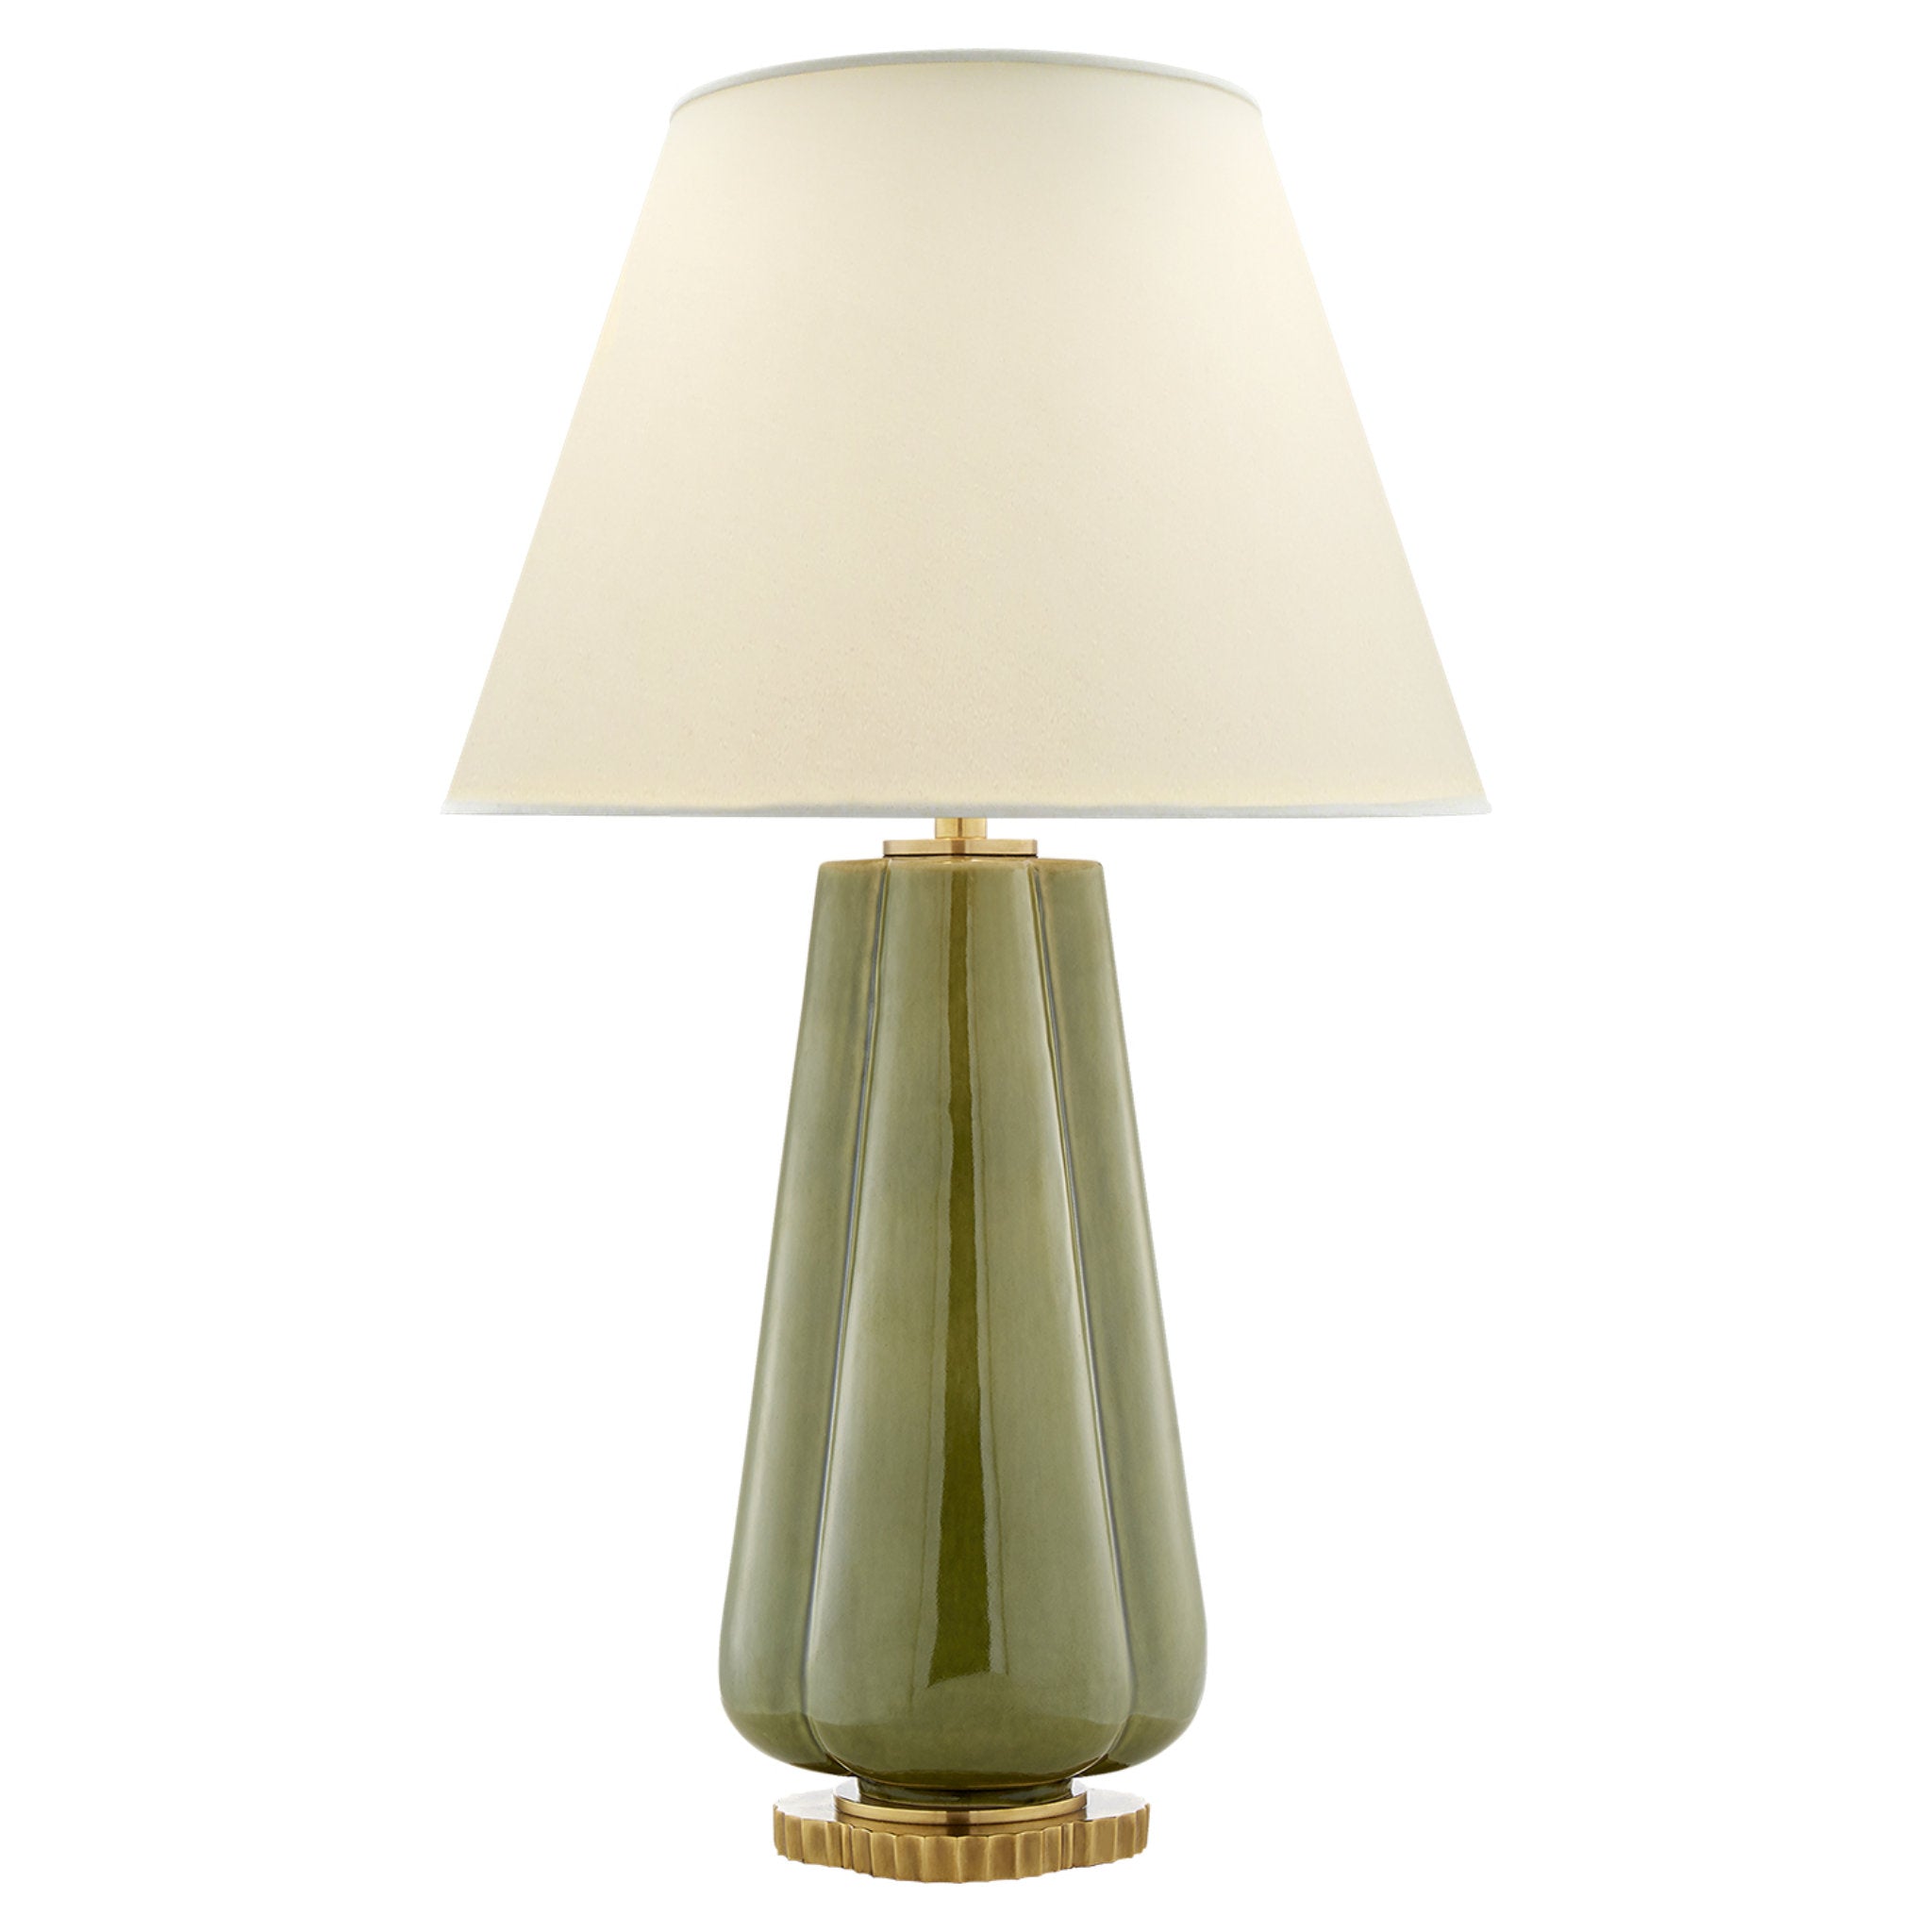 Alexa Hampton Penelope Table Lamp in Green with Natural Percale Shade